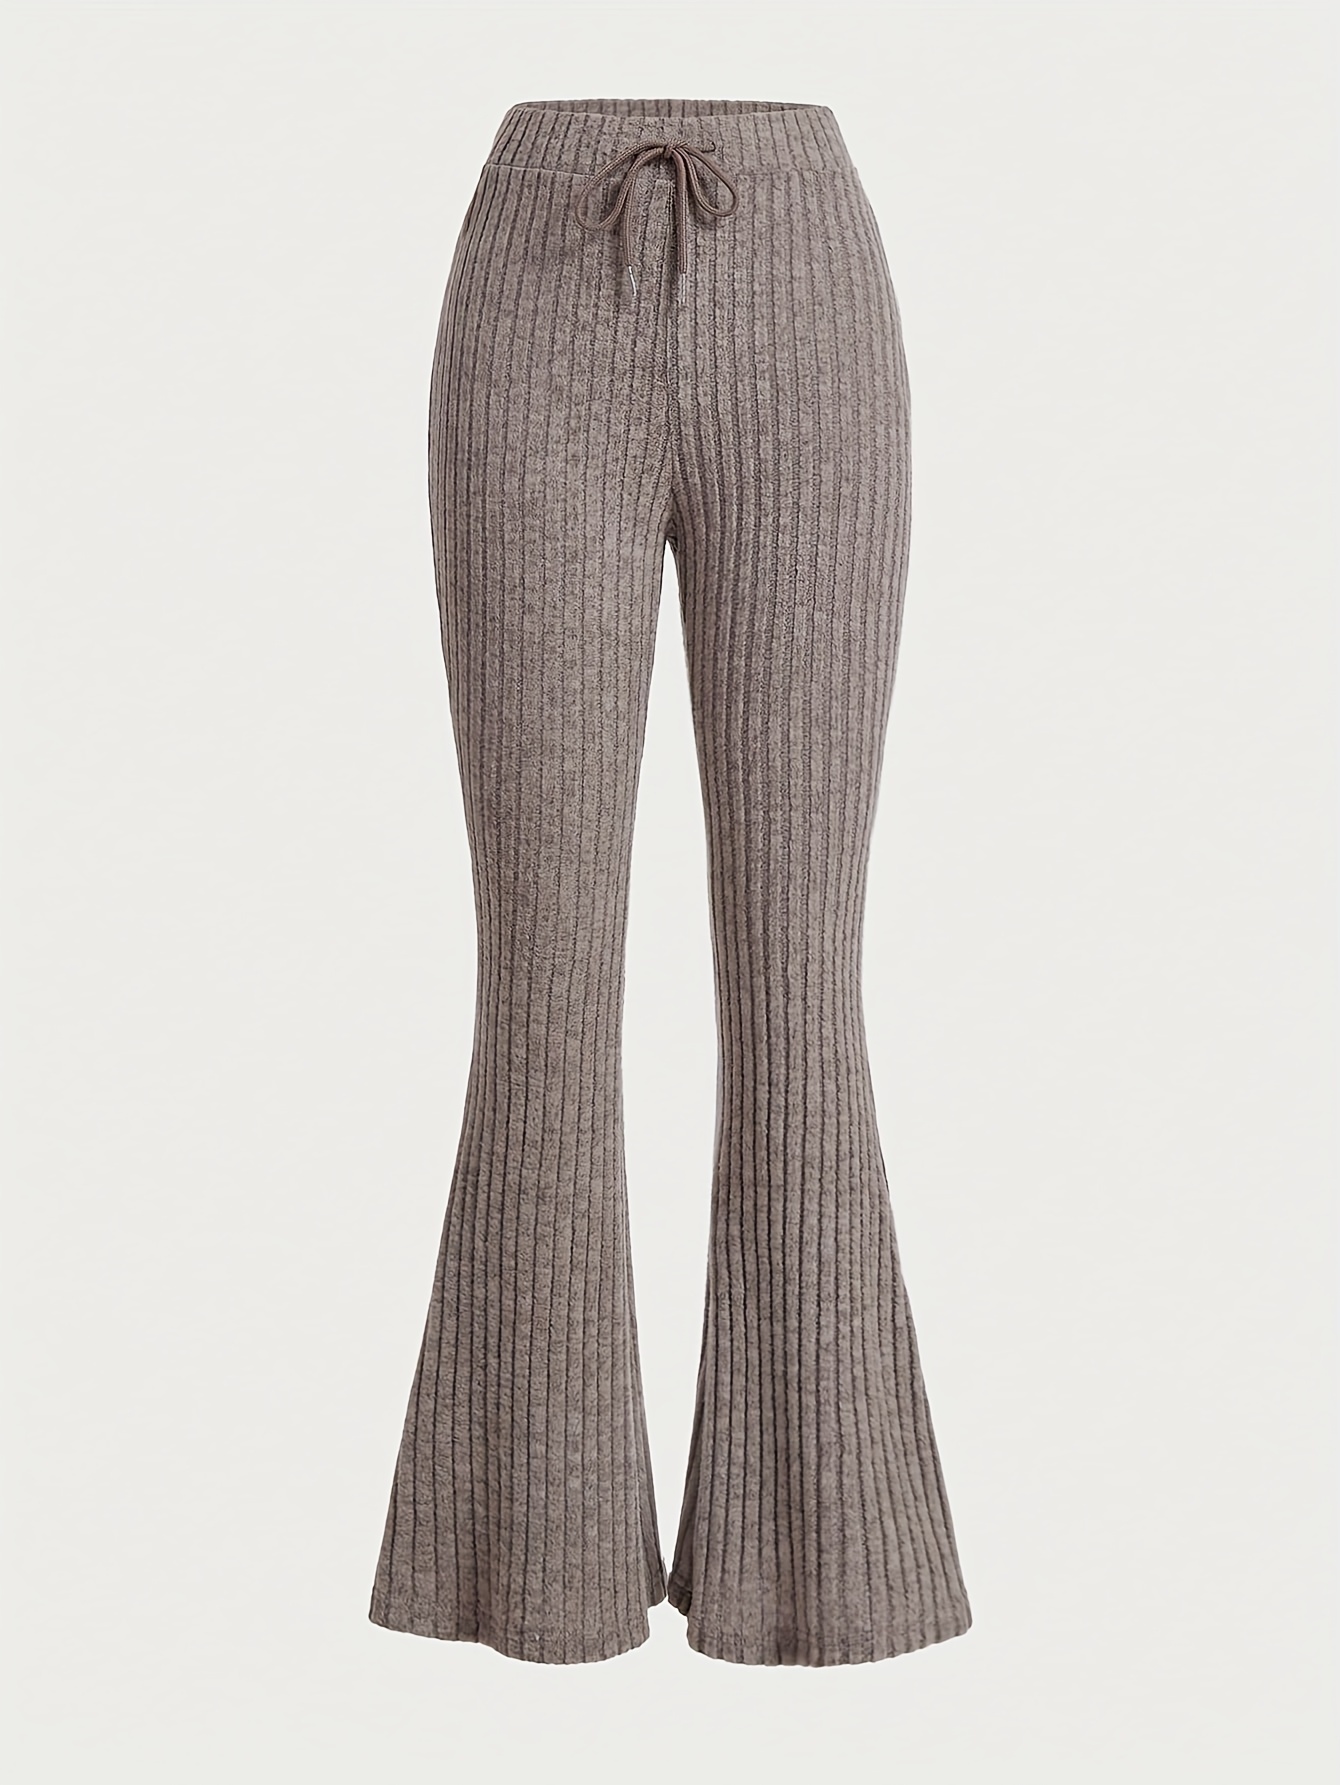  Women's Pants Pants for Women Solid Rib Knit Flare Leg